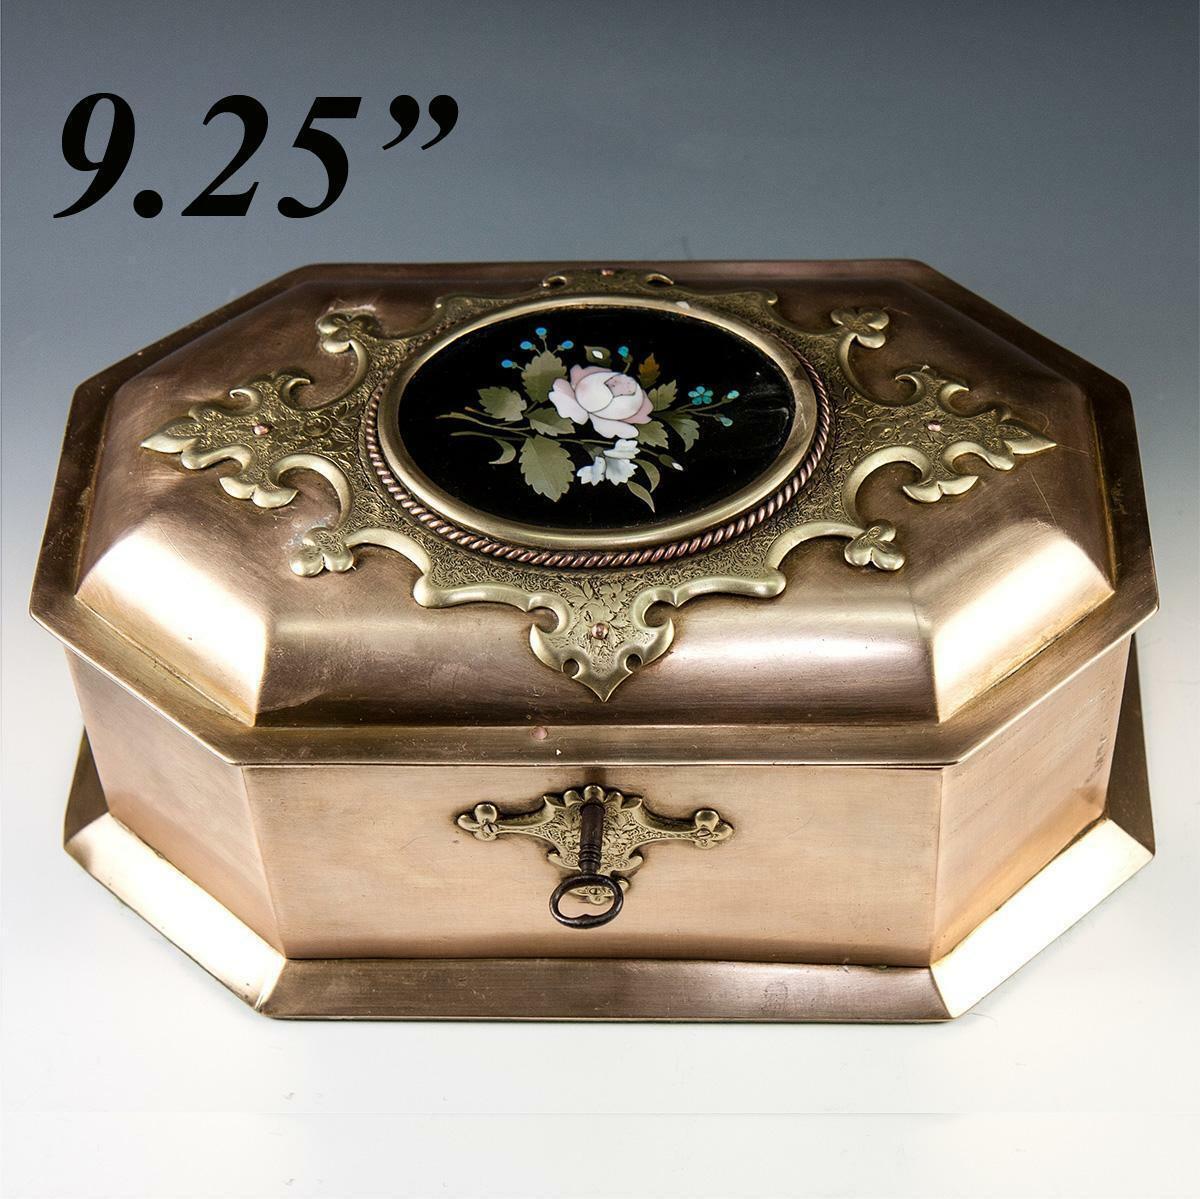 RARE Antique Heavy Italian Jewelry Box, 9.25" Casket, Pietra Dura Plaque c.1850